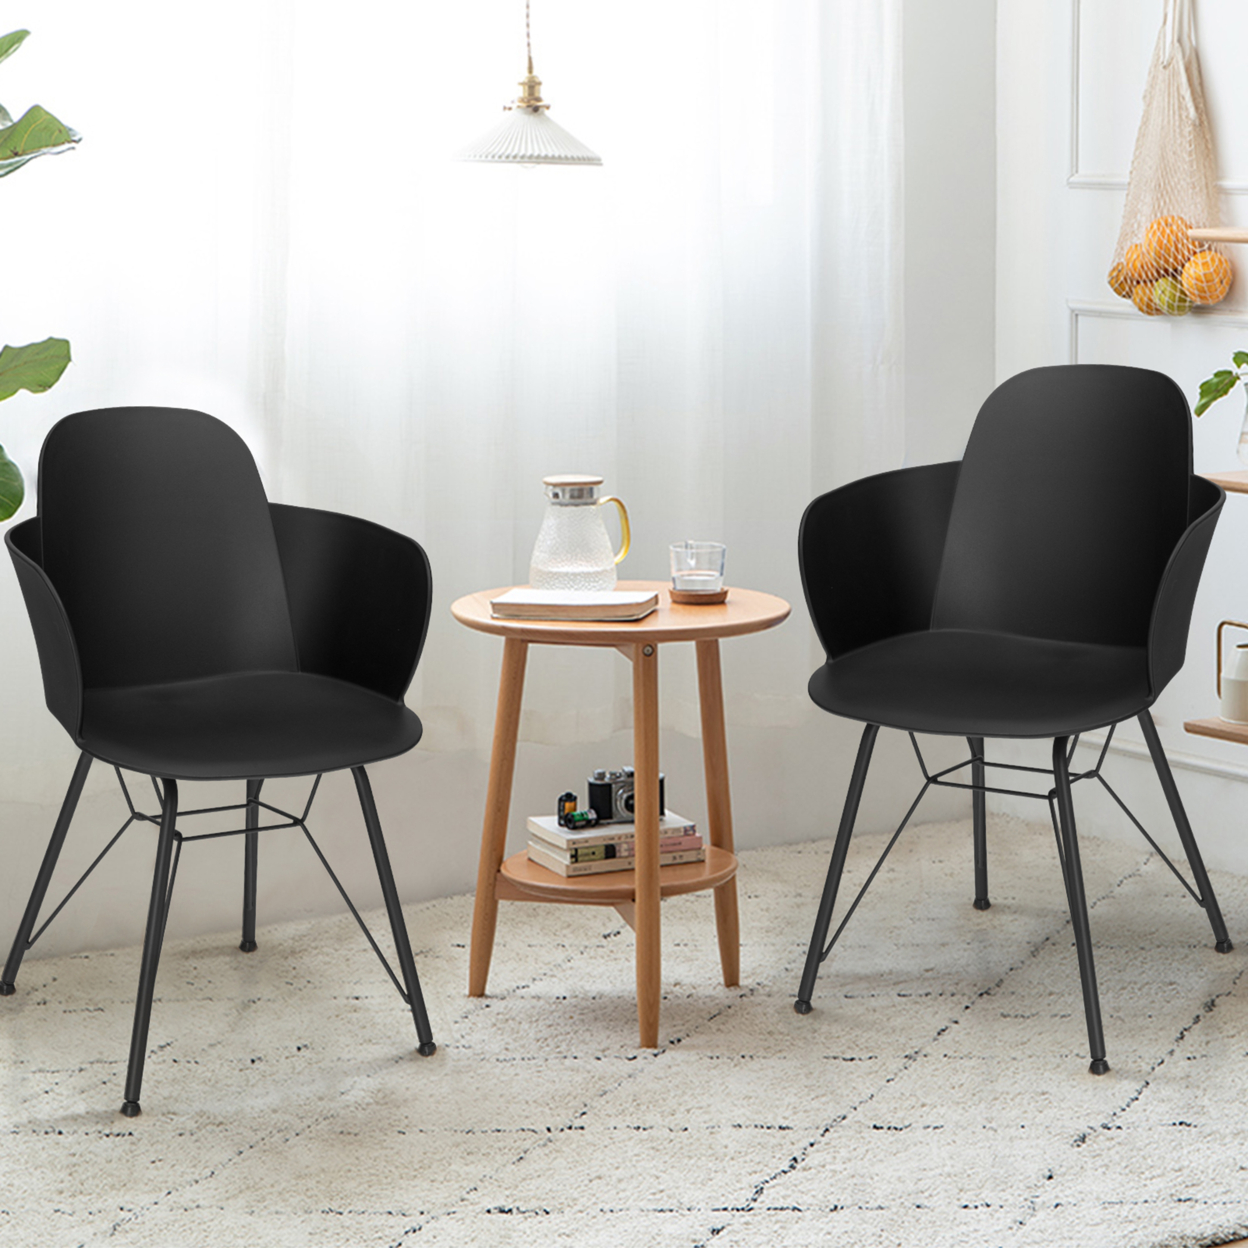 4PCS Modern Dining Chair Plastic Arm Chair Office Home W/ Metal Legs Black